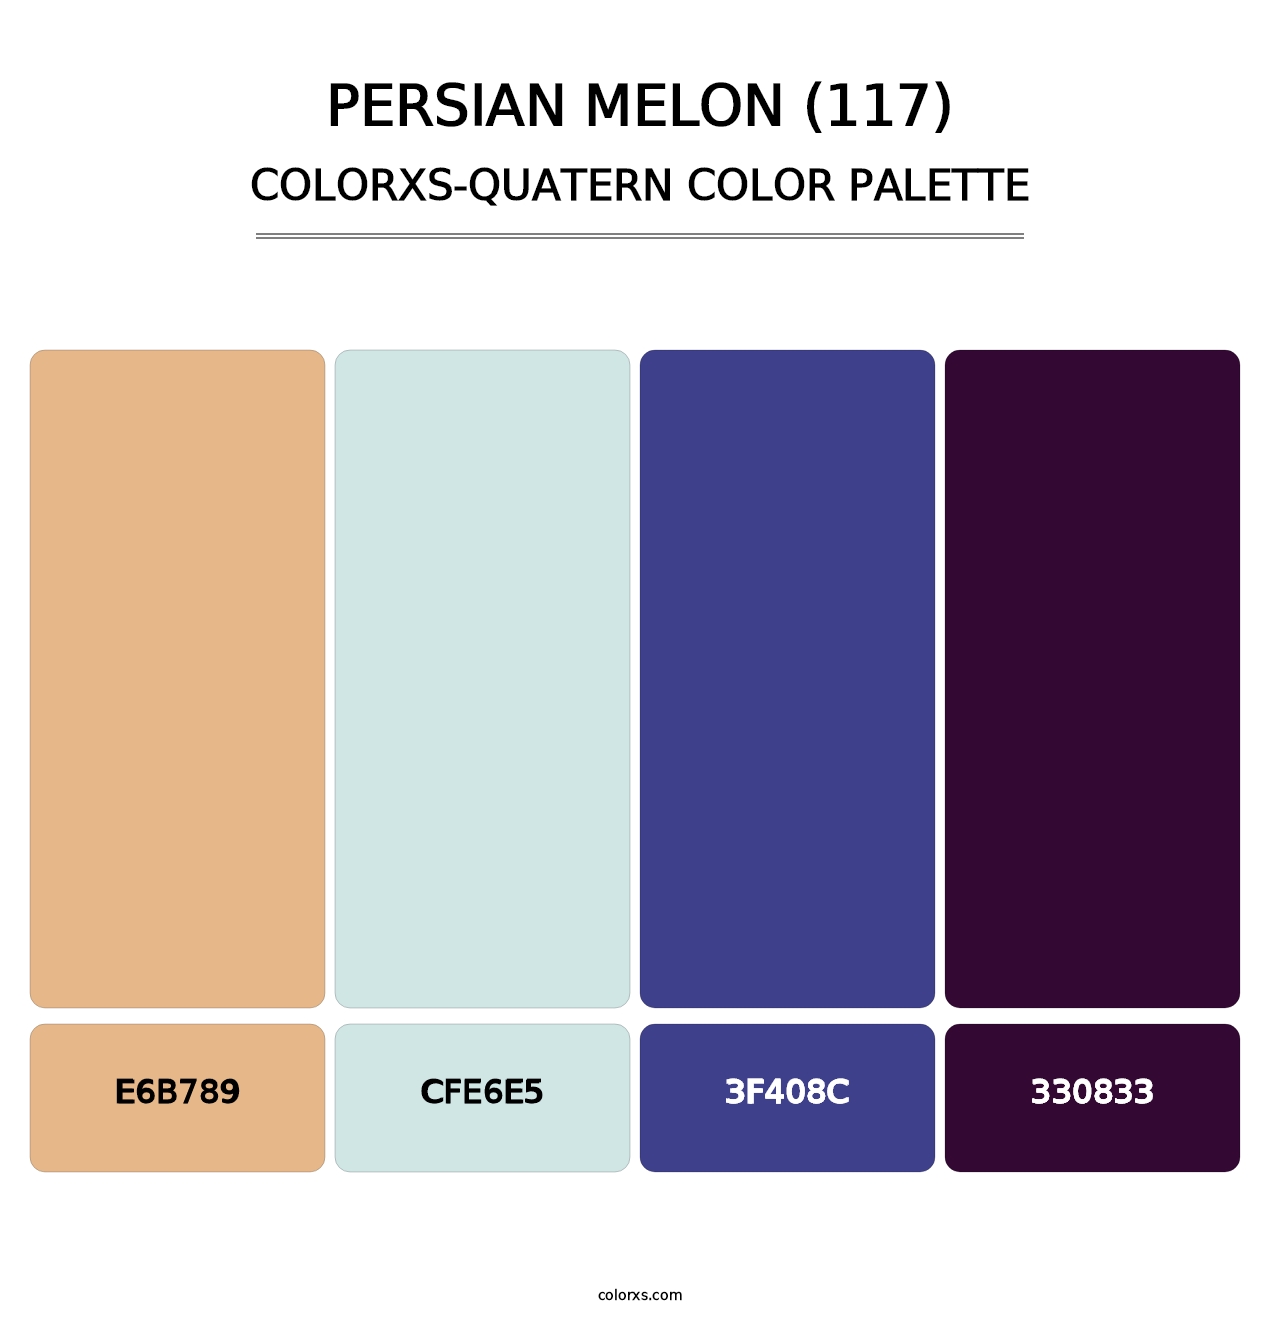 Persian Melon (117) - Colorxs Quatern Palette